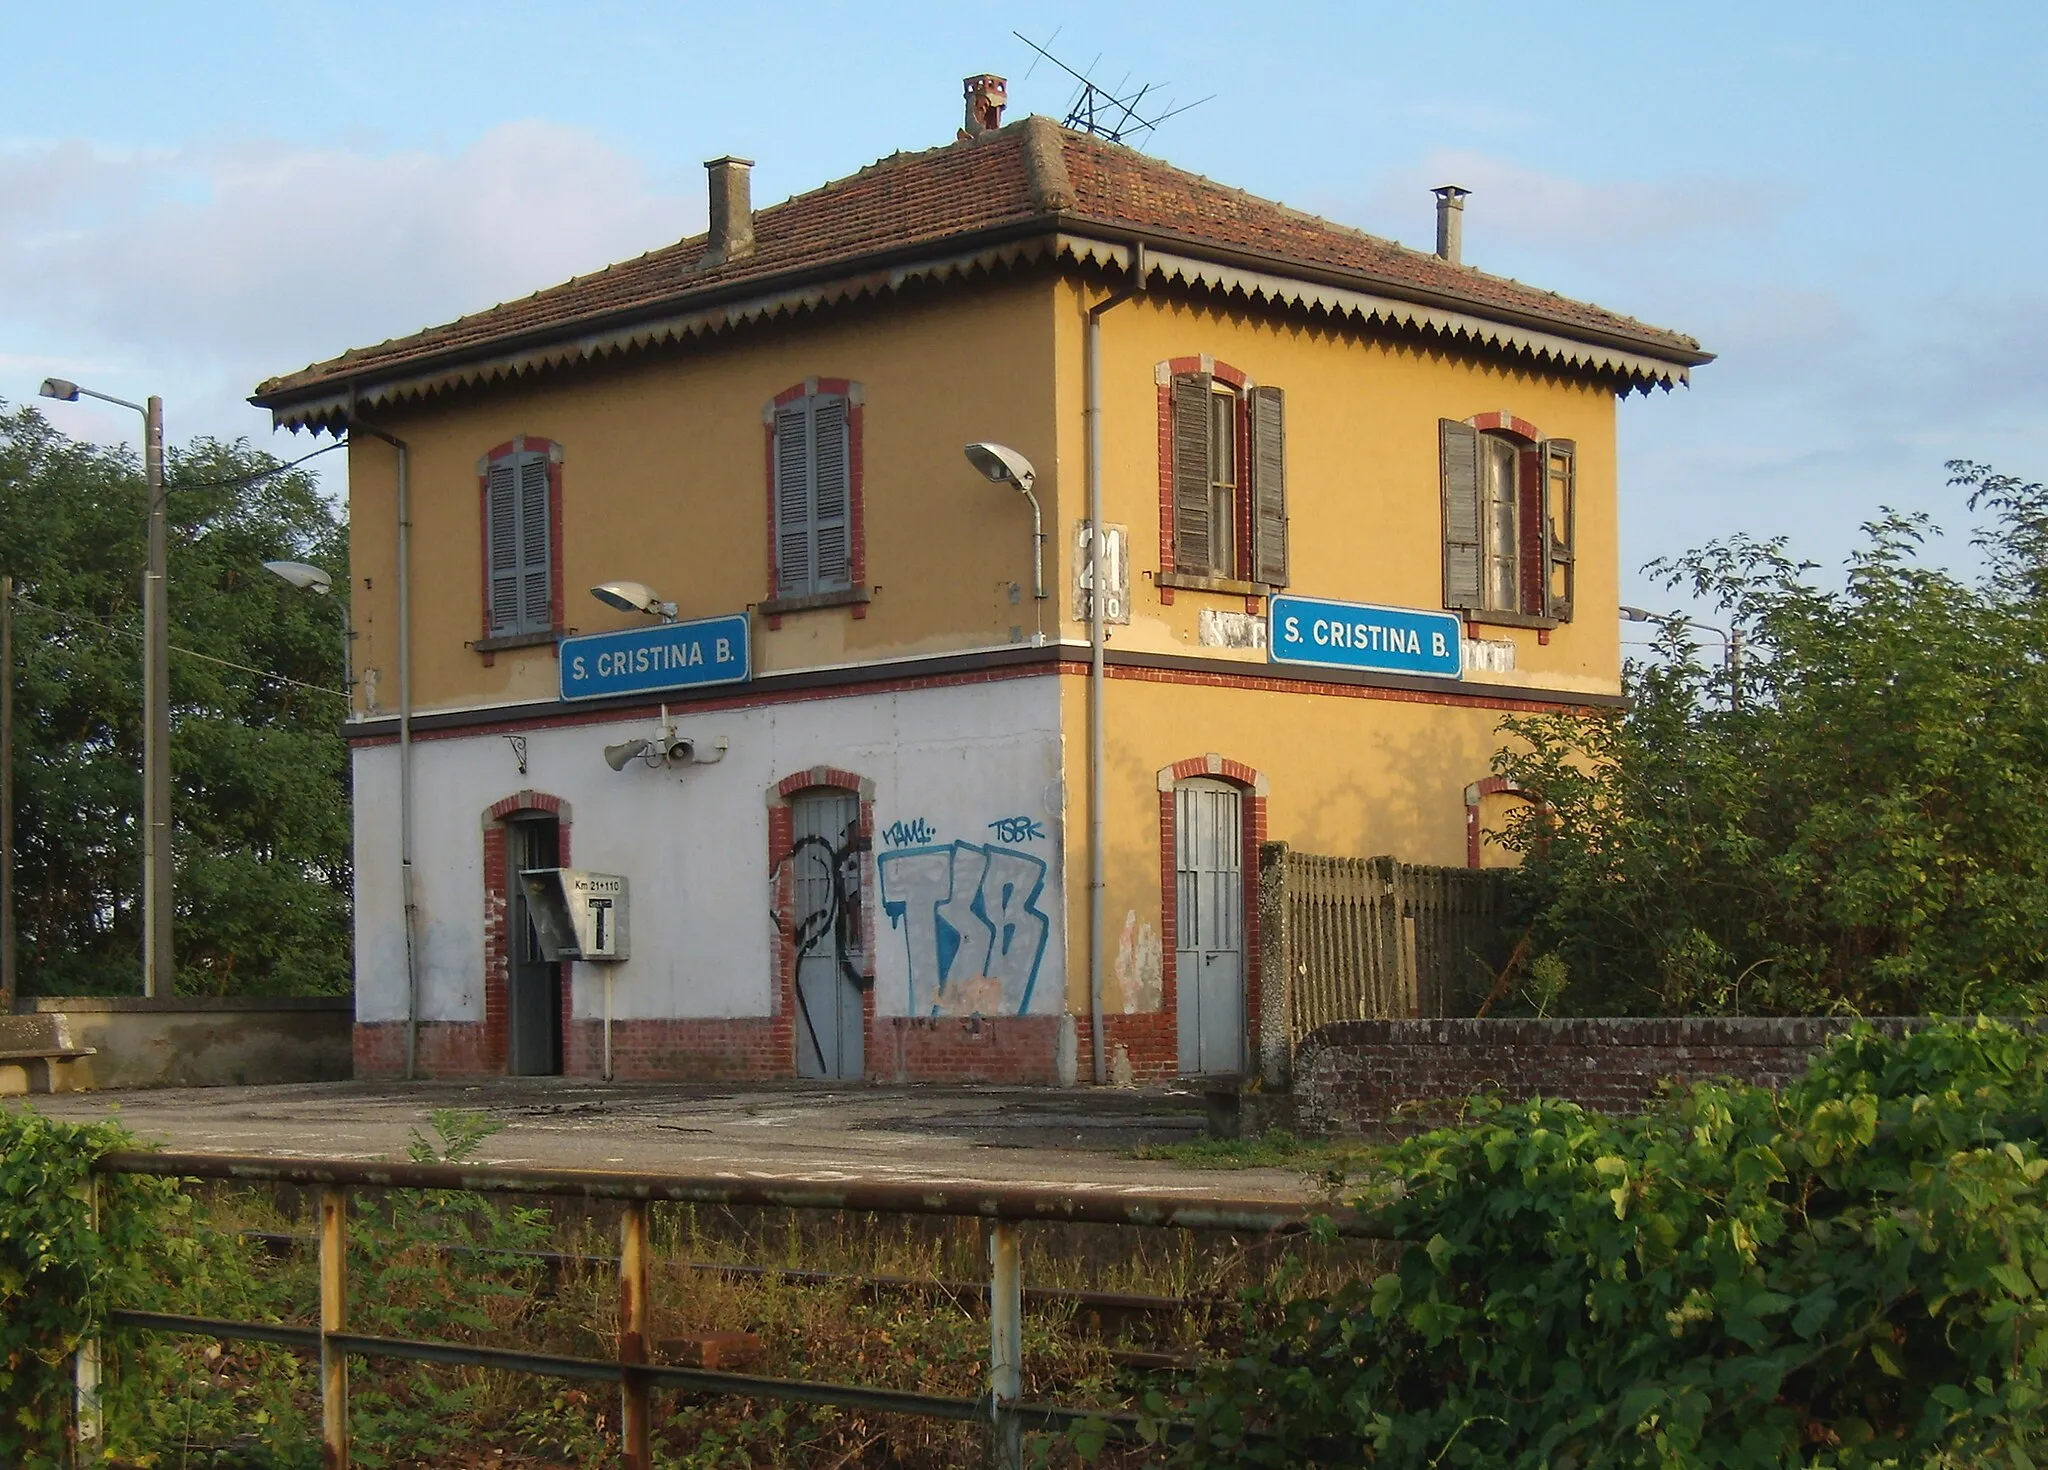 Photo showing: Railway station in Santa Cristina e Bissone (PV), Italy